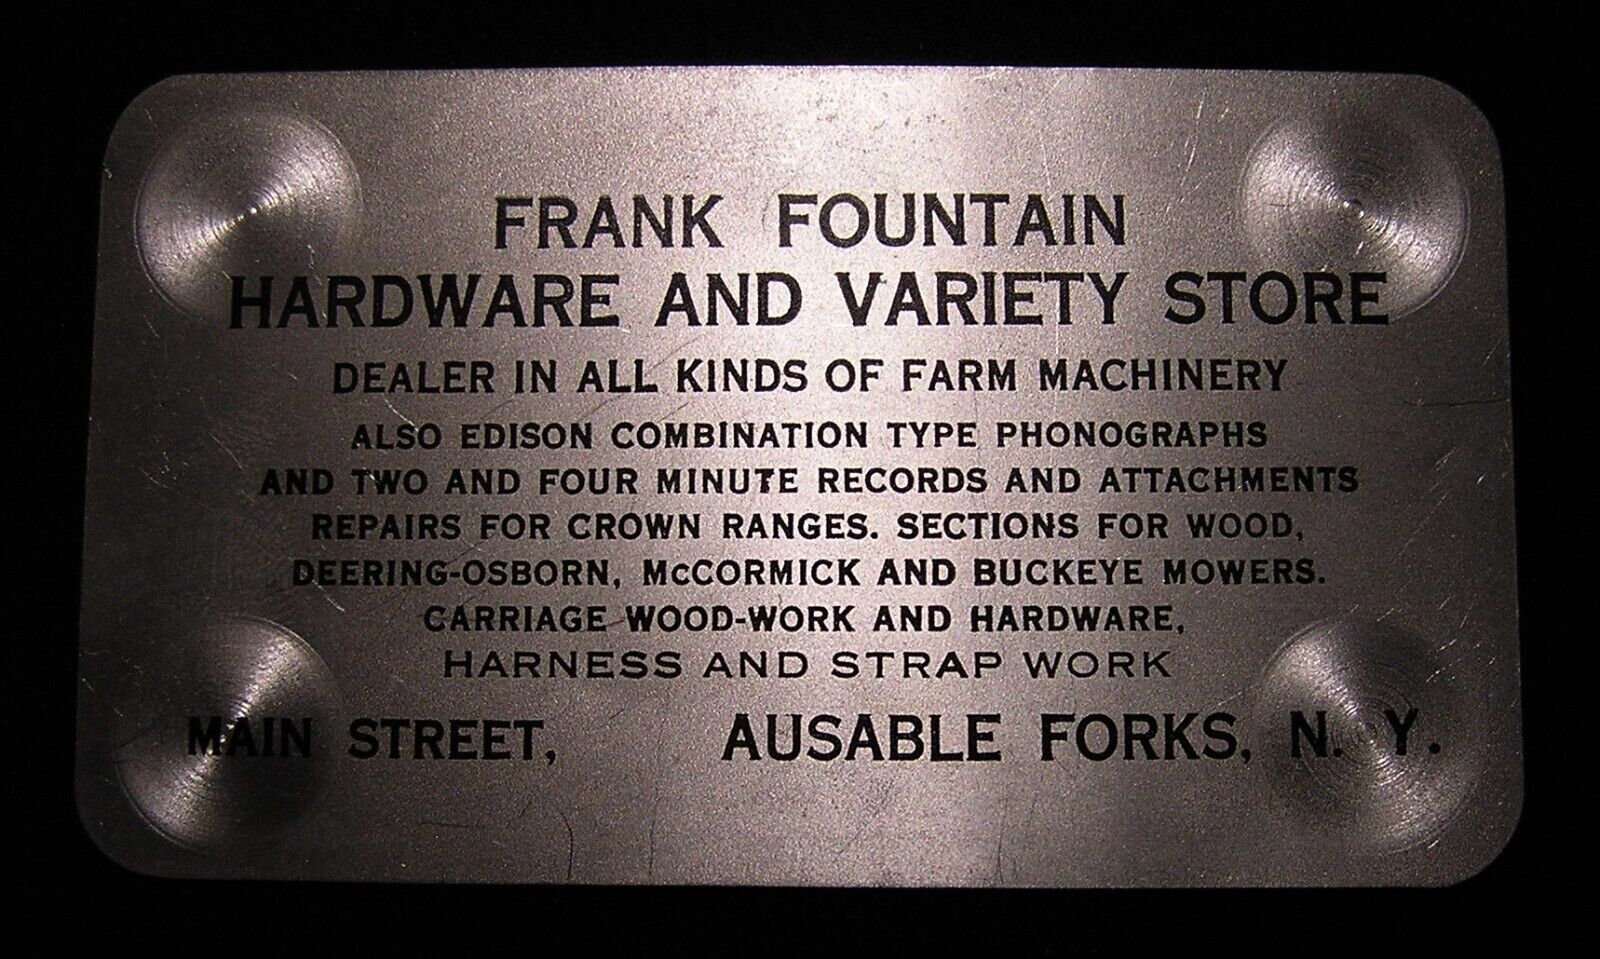 1913 FRANK FOUNTAIN HARDWARE VARIETY STORE ALUMINUM CALENDAR TRADE BUSINESS CARD